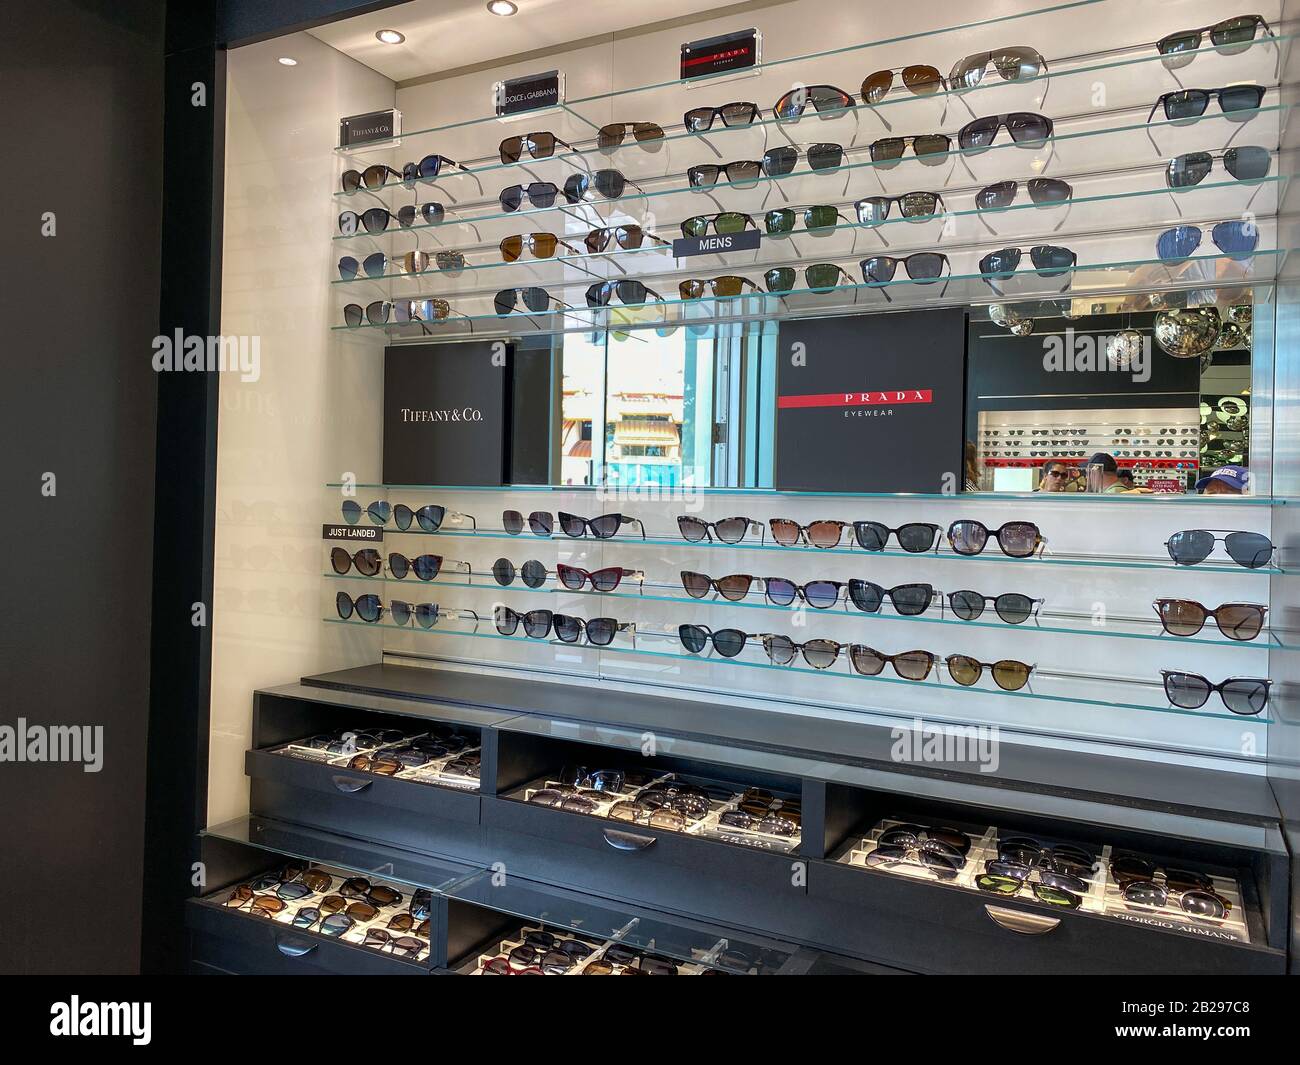 orlandoflusa 21720 a display of prada eyewear tiffany co and dolce gabbana sunglasses at sunglass hut retail store at a mall 2B297C8